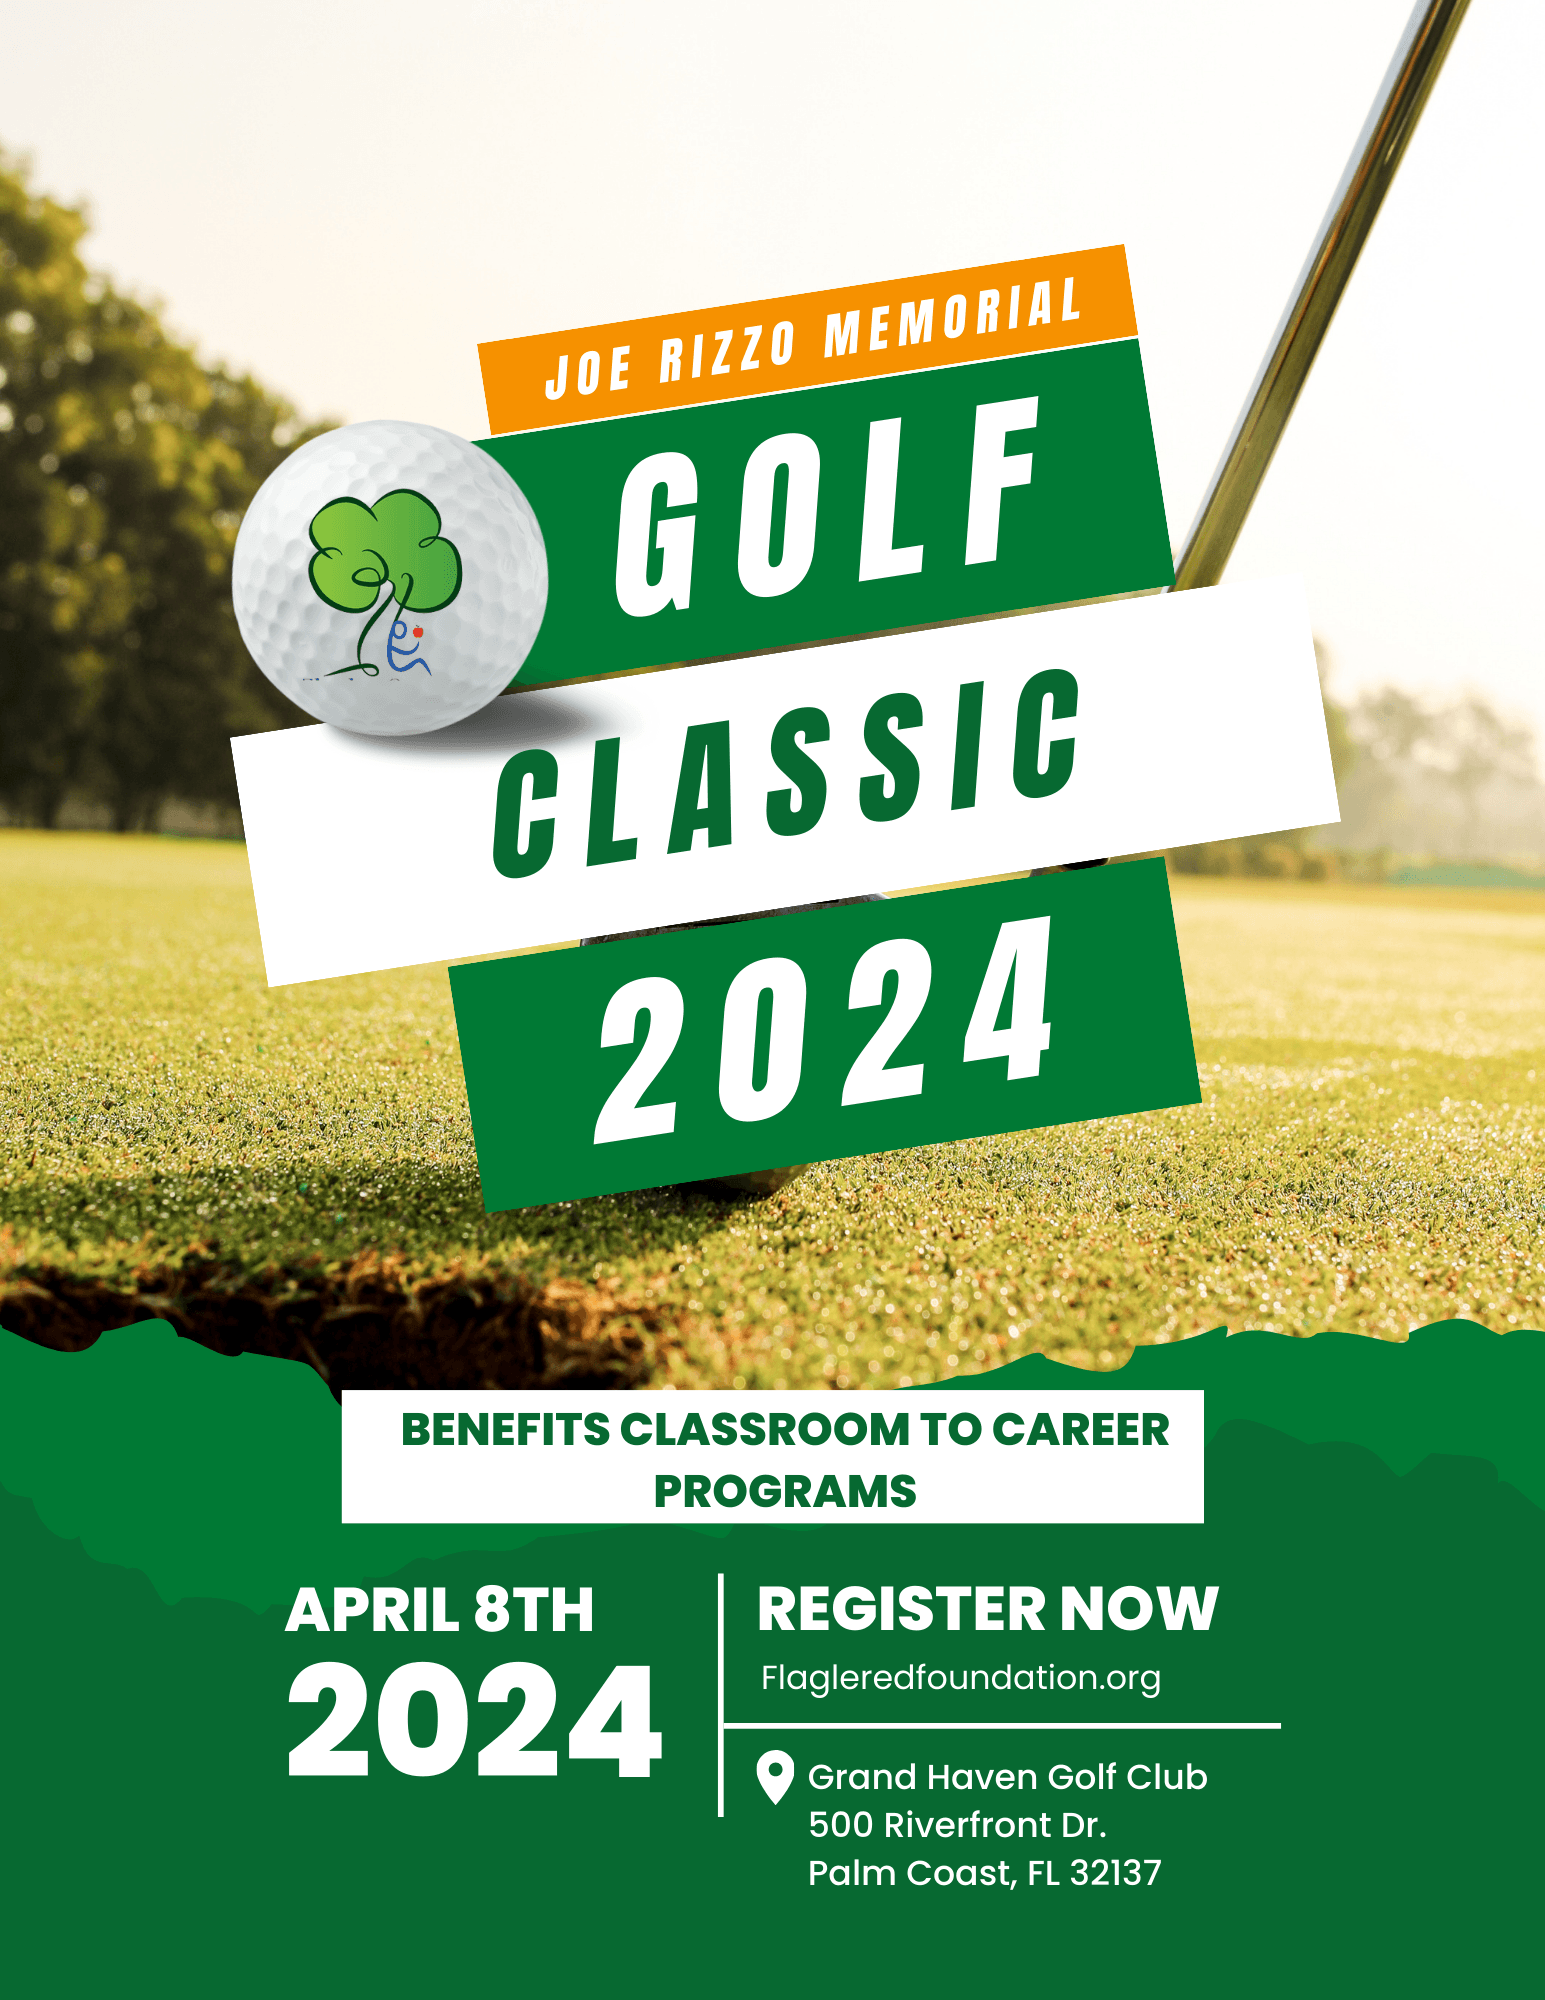 2024 Joe Rizzo Memorial Golf Classic!